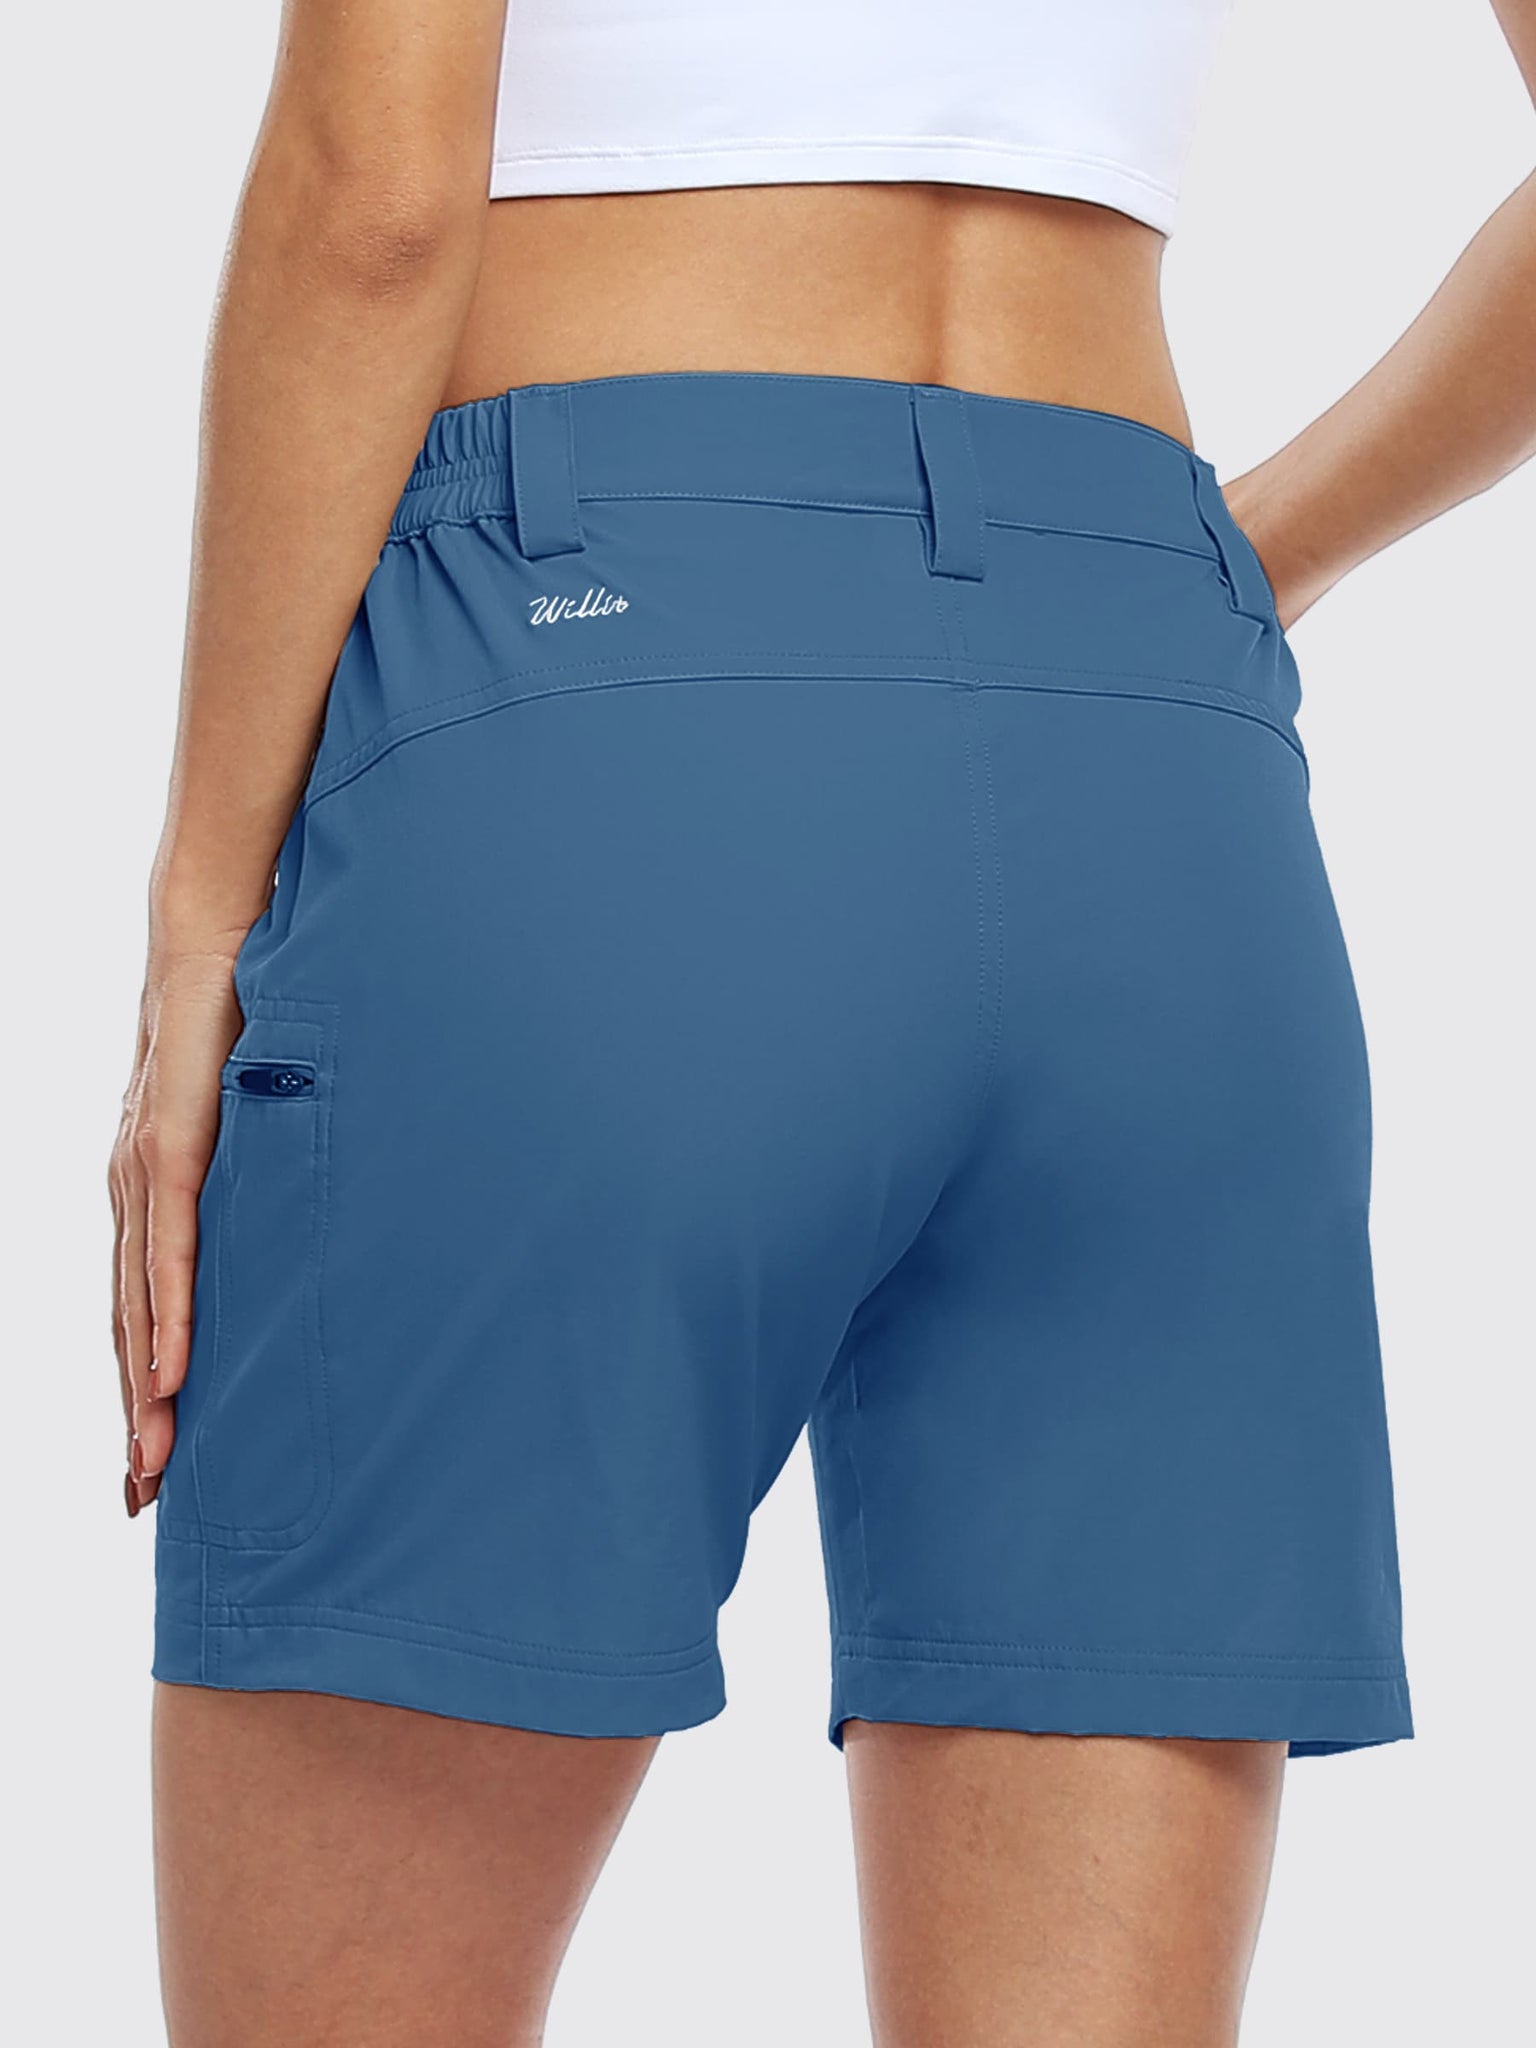 Willit Women's Outdoor Cargo Shorts 6 Inseam_Blue_model5